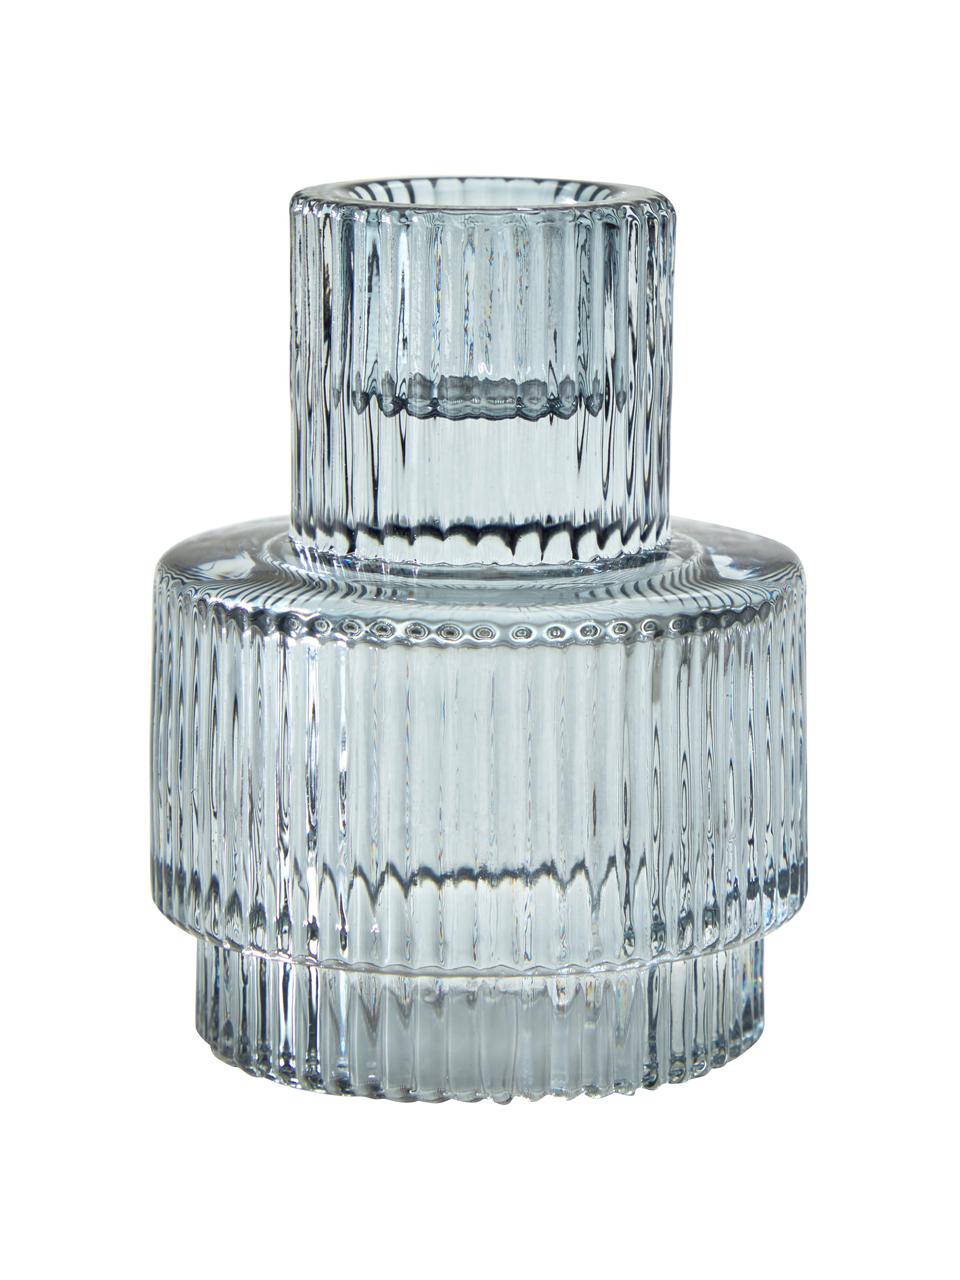 Kandelaar Danali in grijs, Glas, Transparant, grijs, Ø 7 x H 8 cm